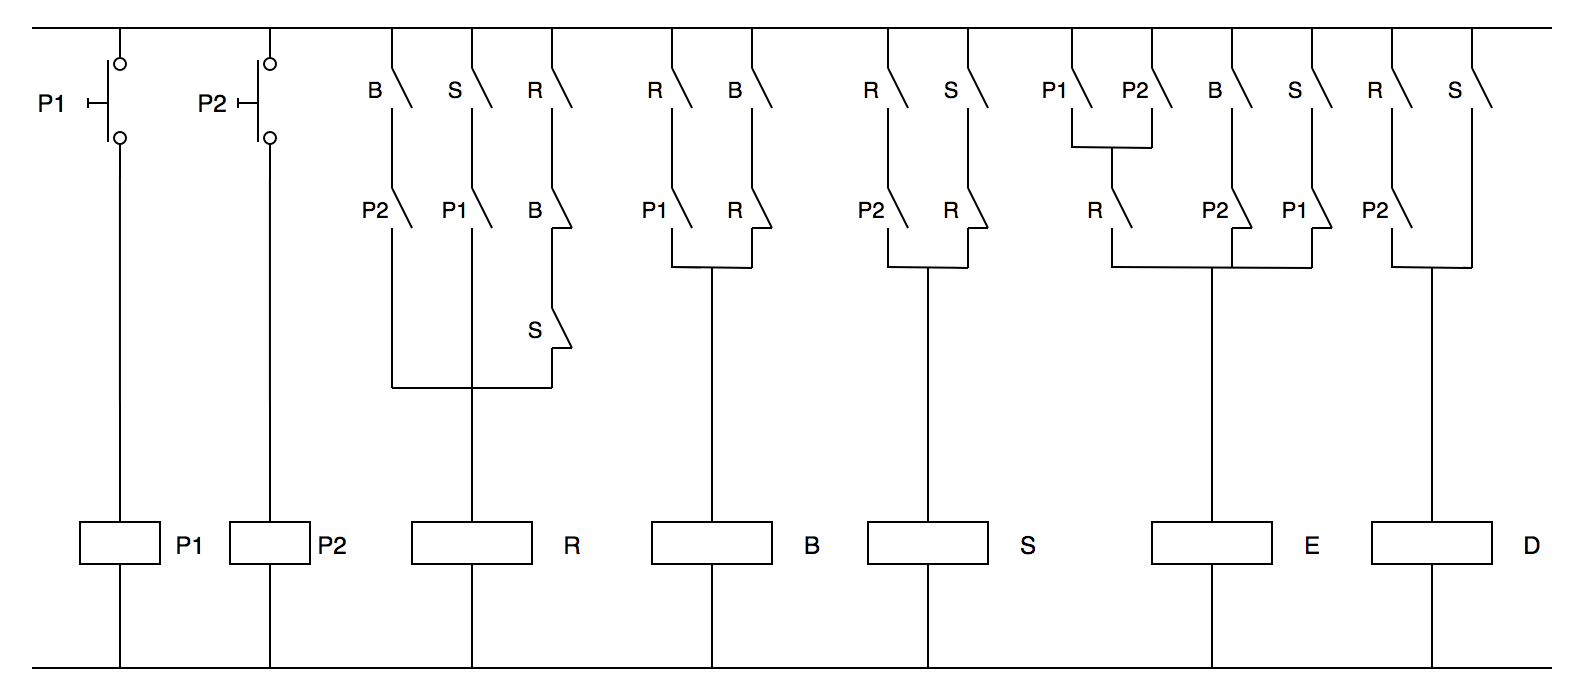 Ejercicio de control de escalera mecánica: diagrama de contactos